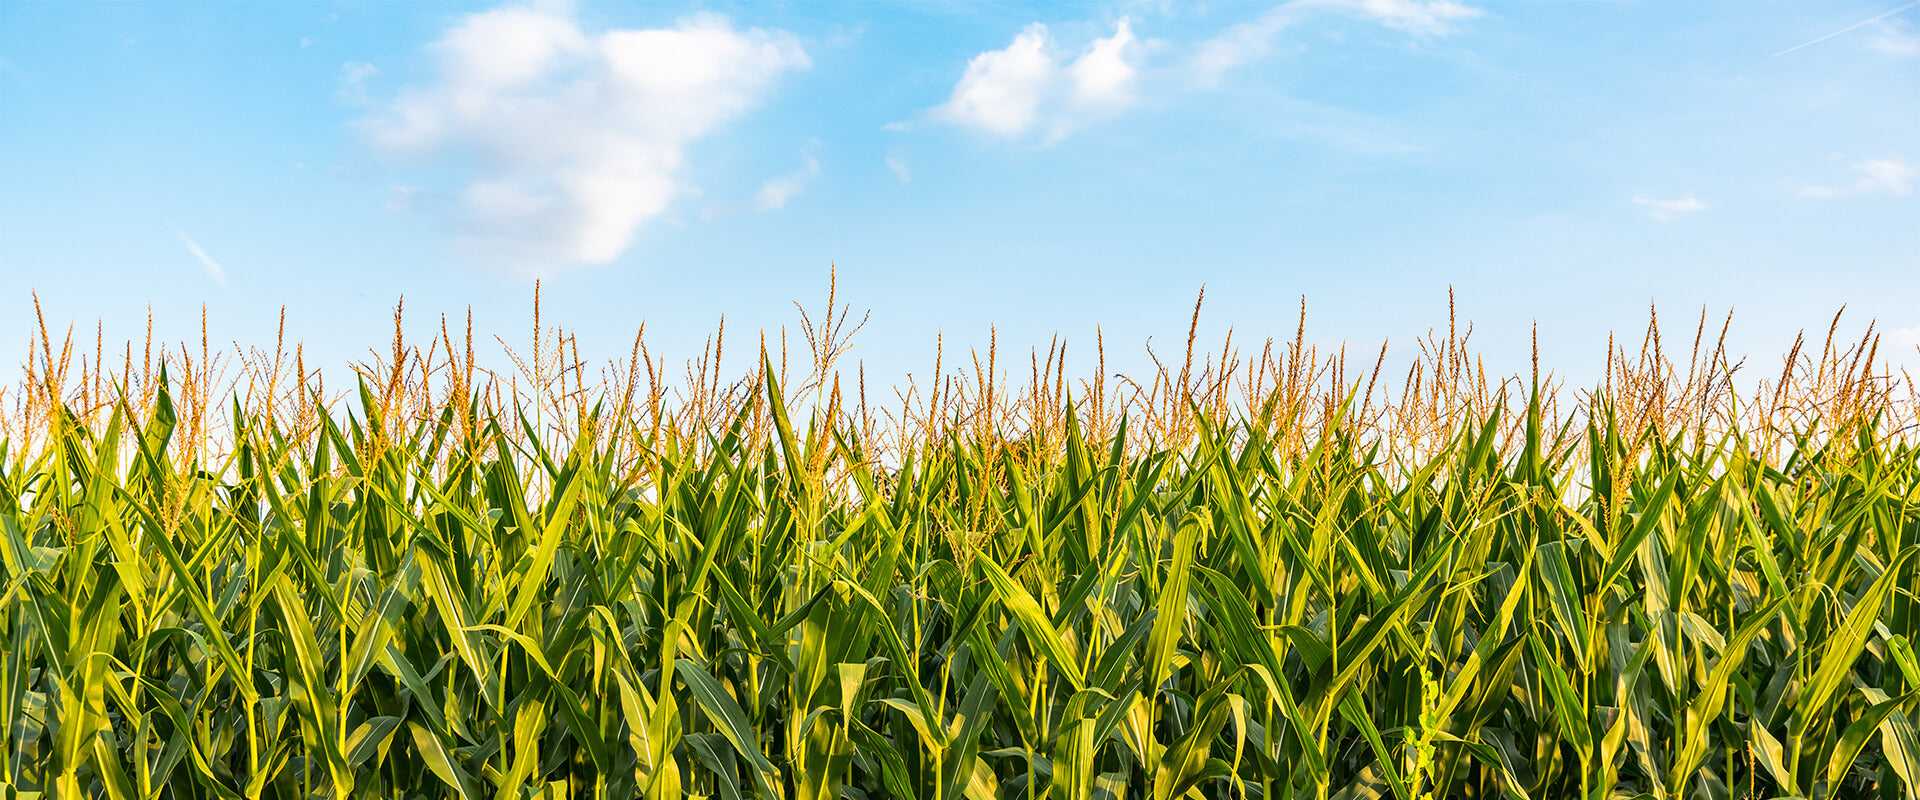 Corn field and blue sky